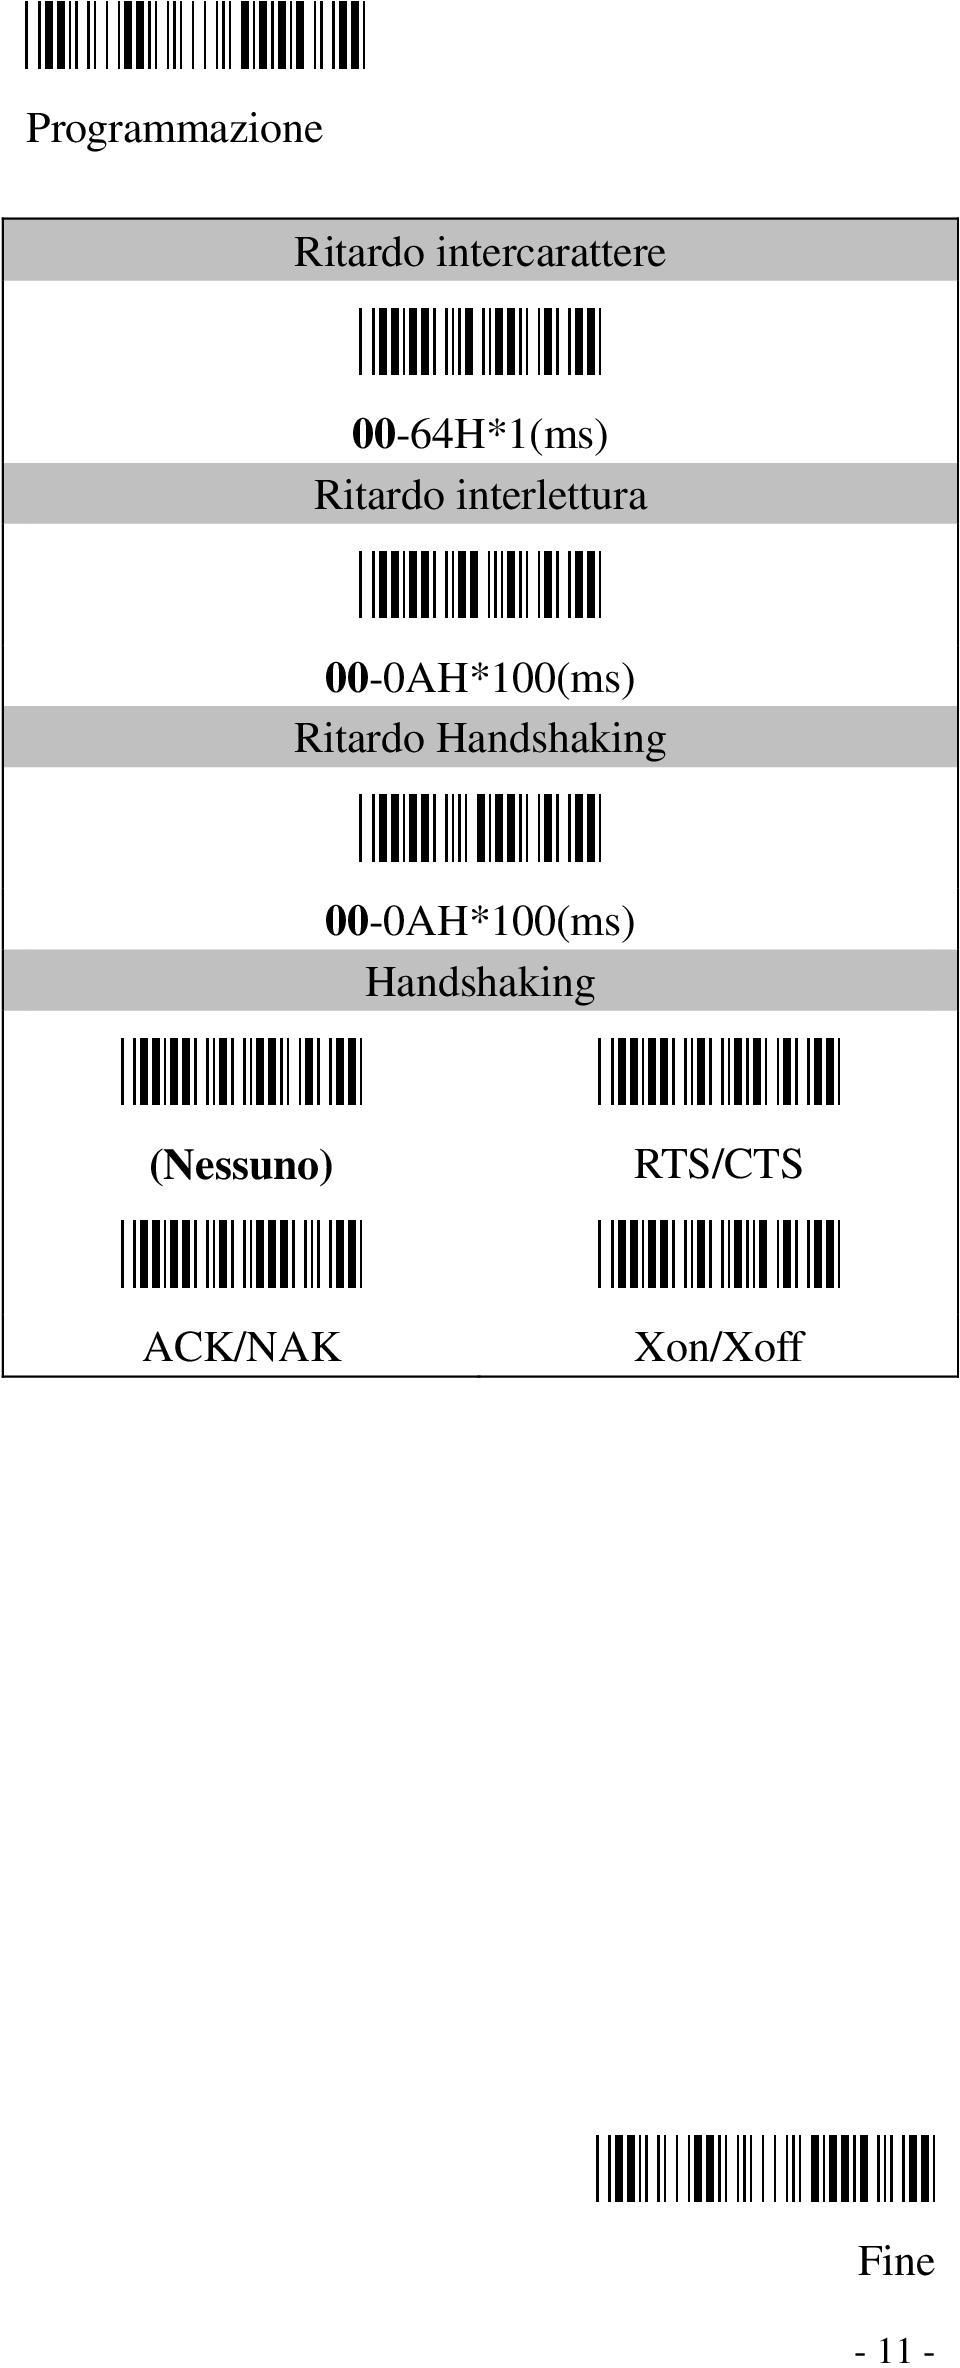 Ritardo Handshaking 00-0AH*100(ms)